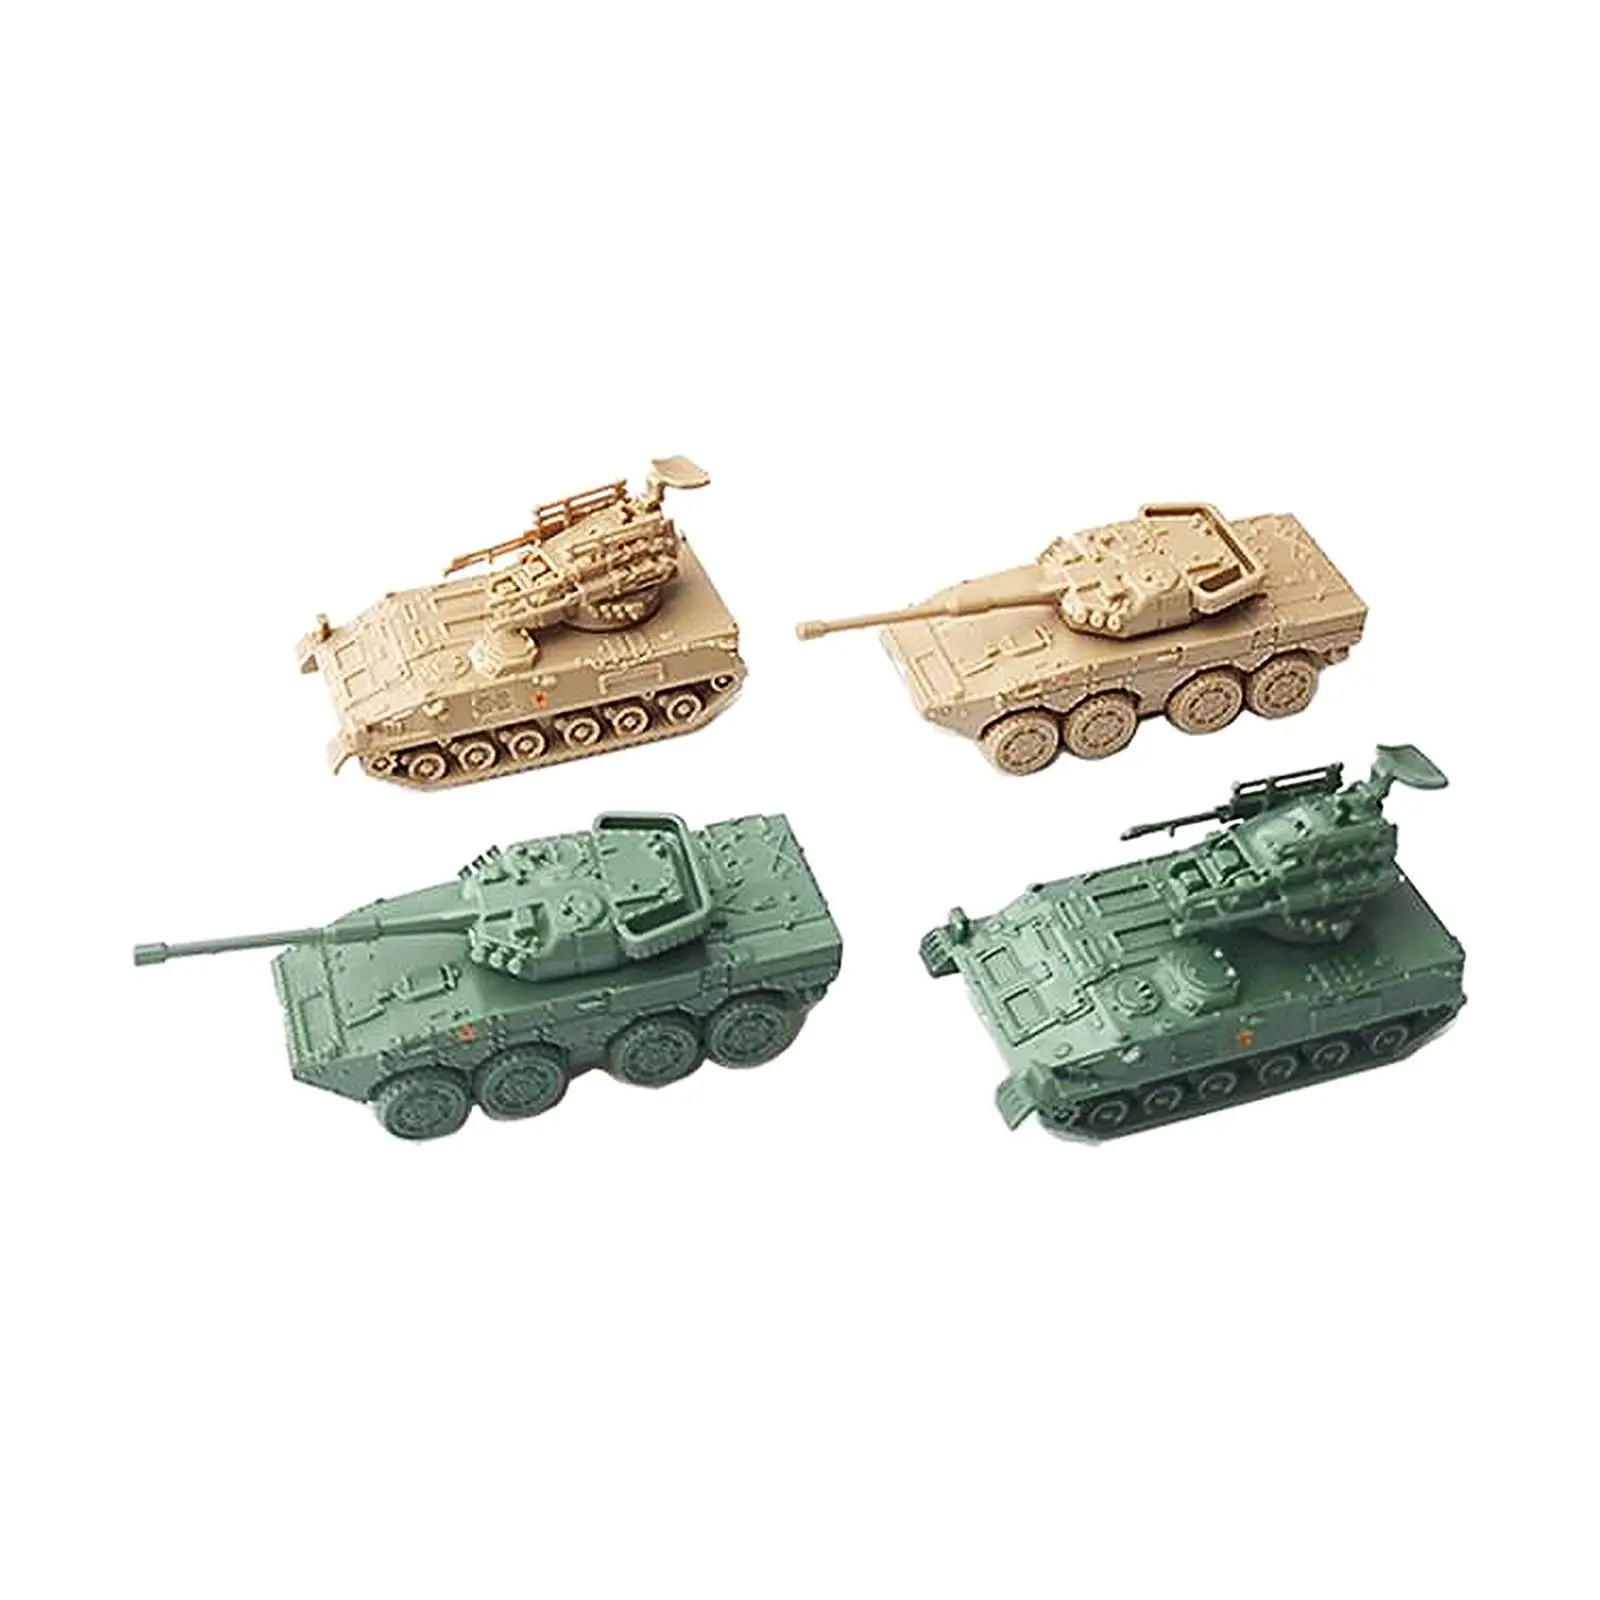 4D 1/144 Tank Model Kits Building Kits Vehicle Model Toy Micro Landscape